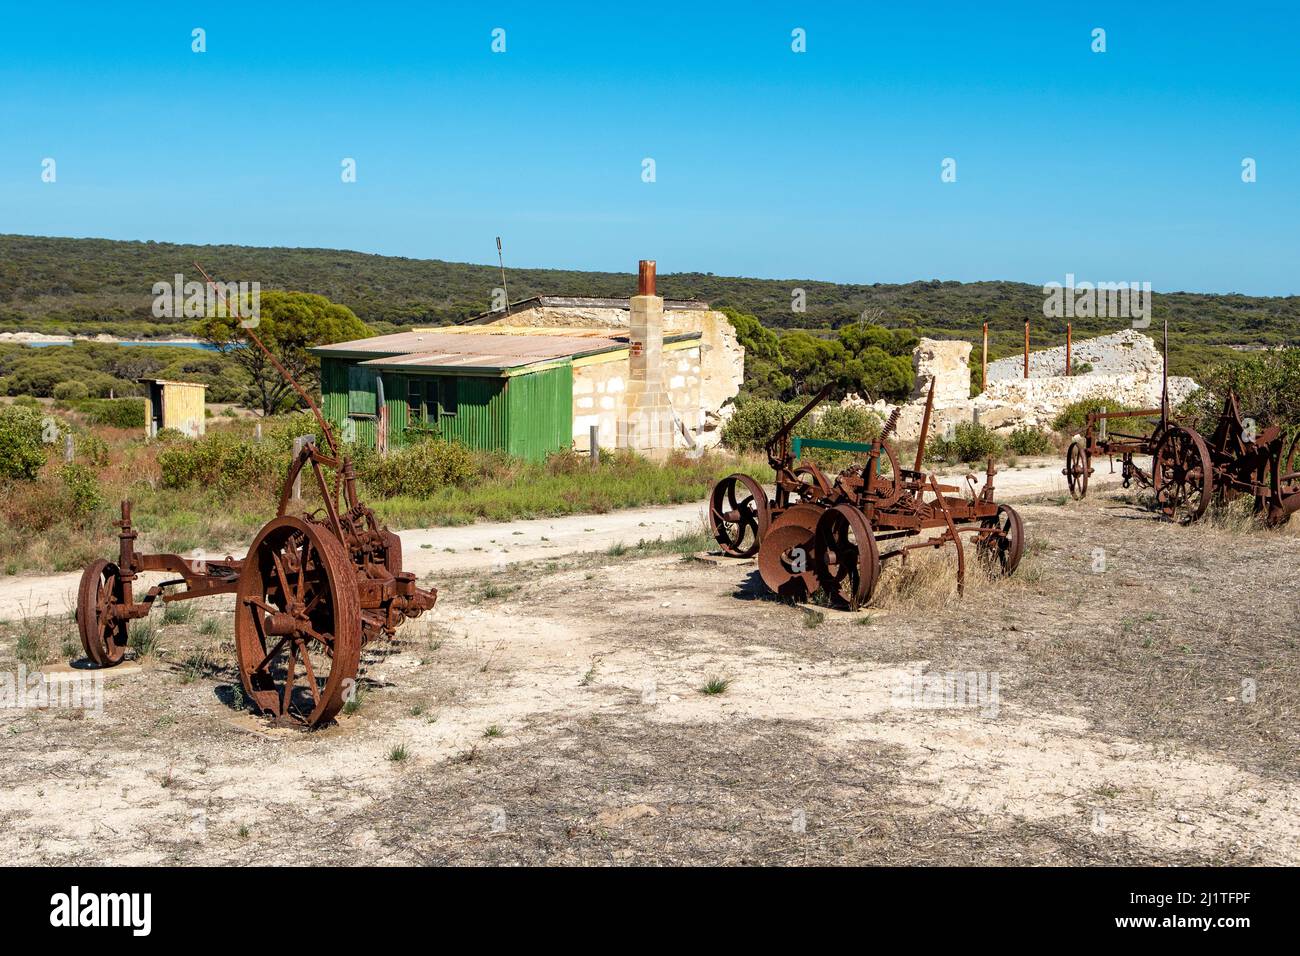 Historic Settlement of Inneston, South Yorke Peninsula, South Australia, Australia Stock Photo